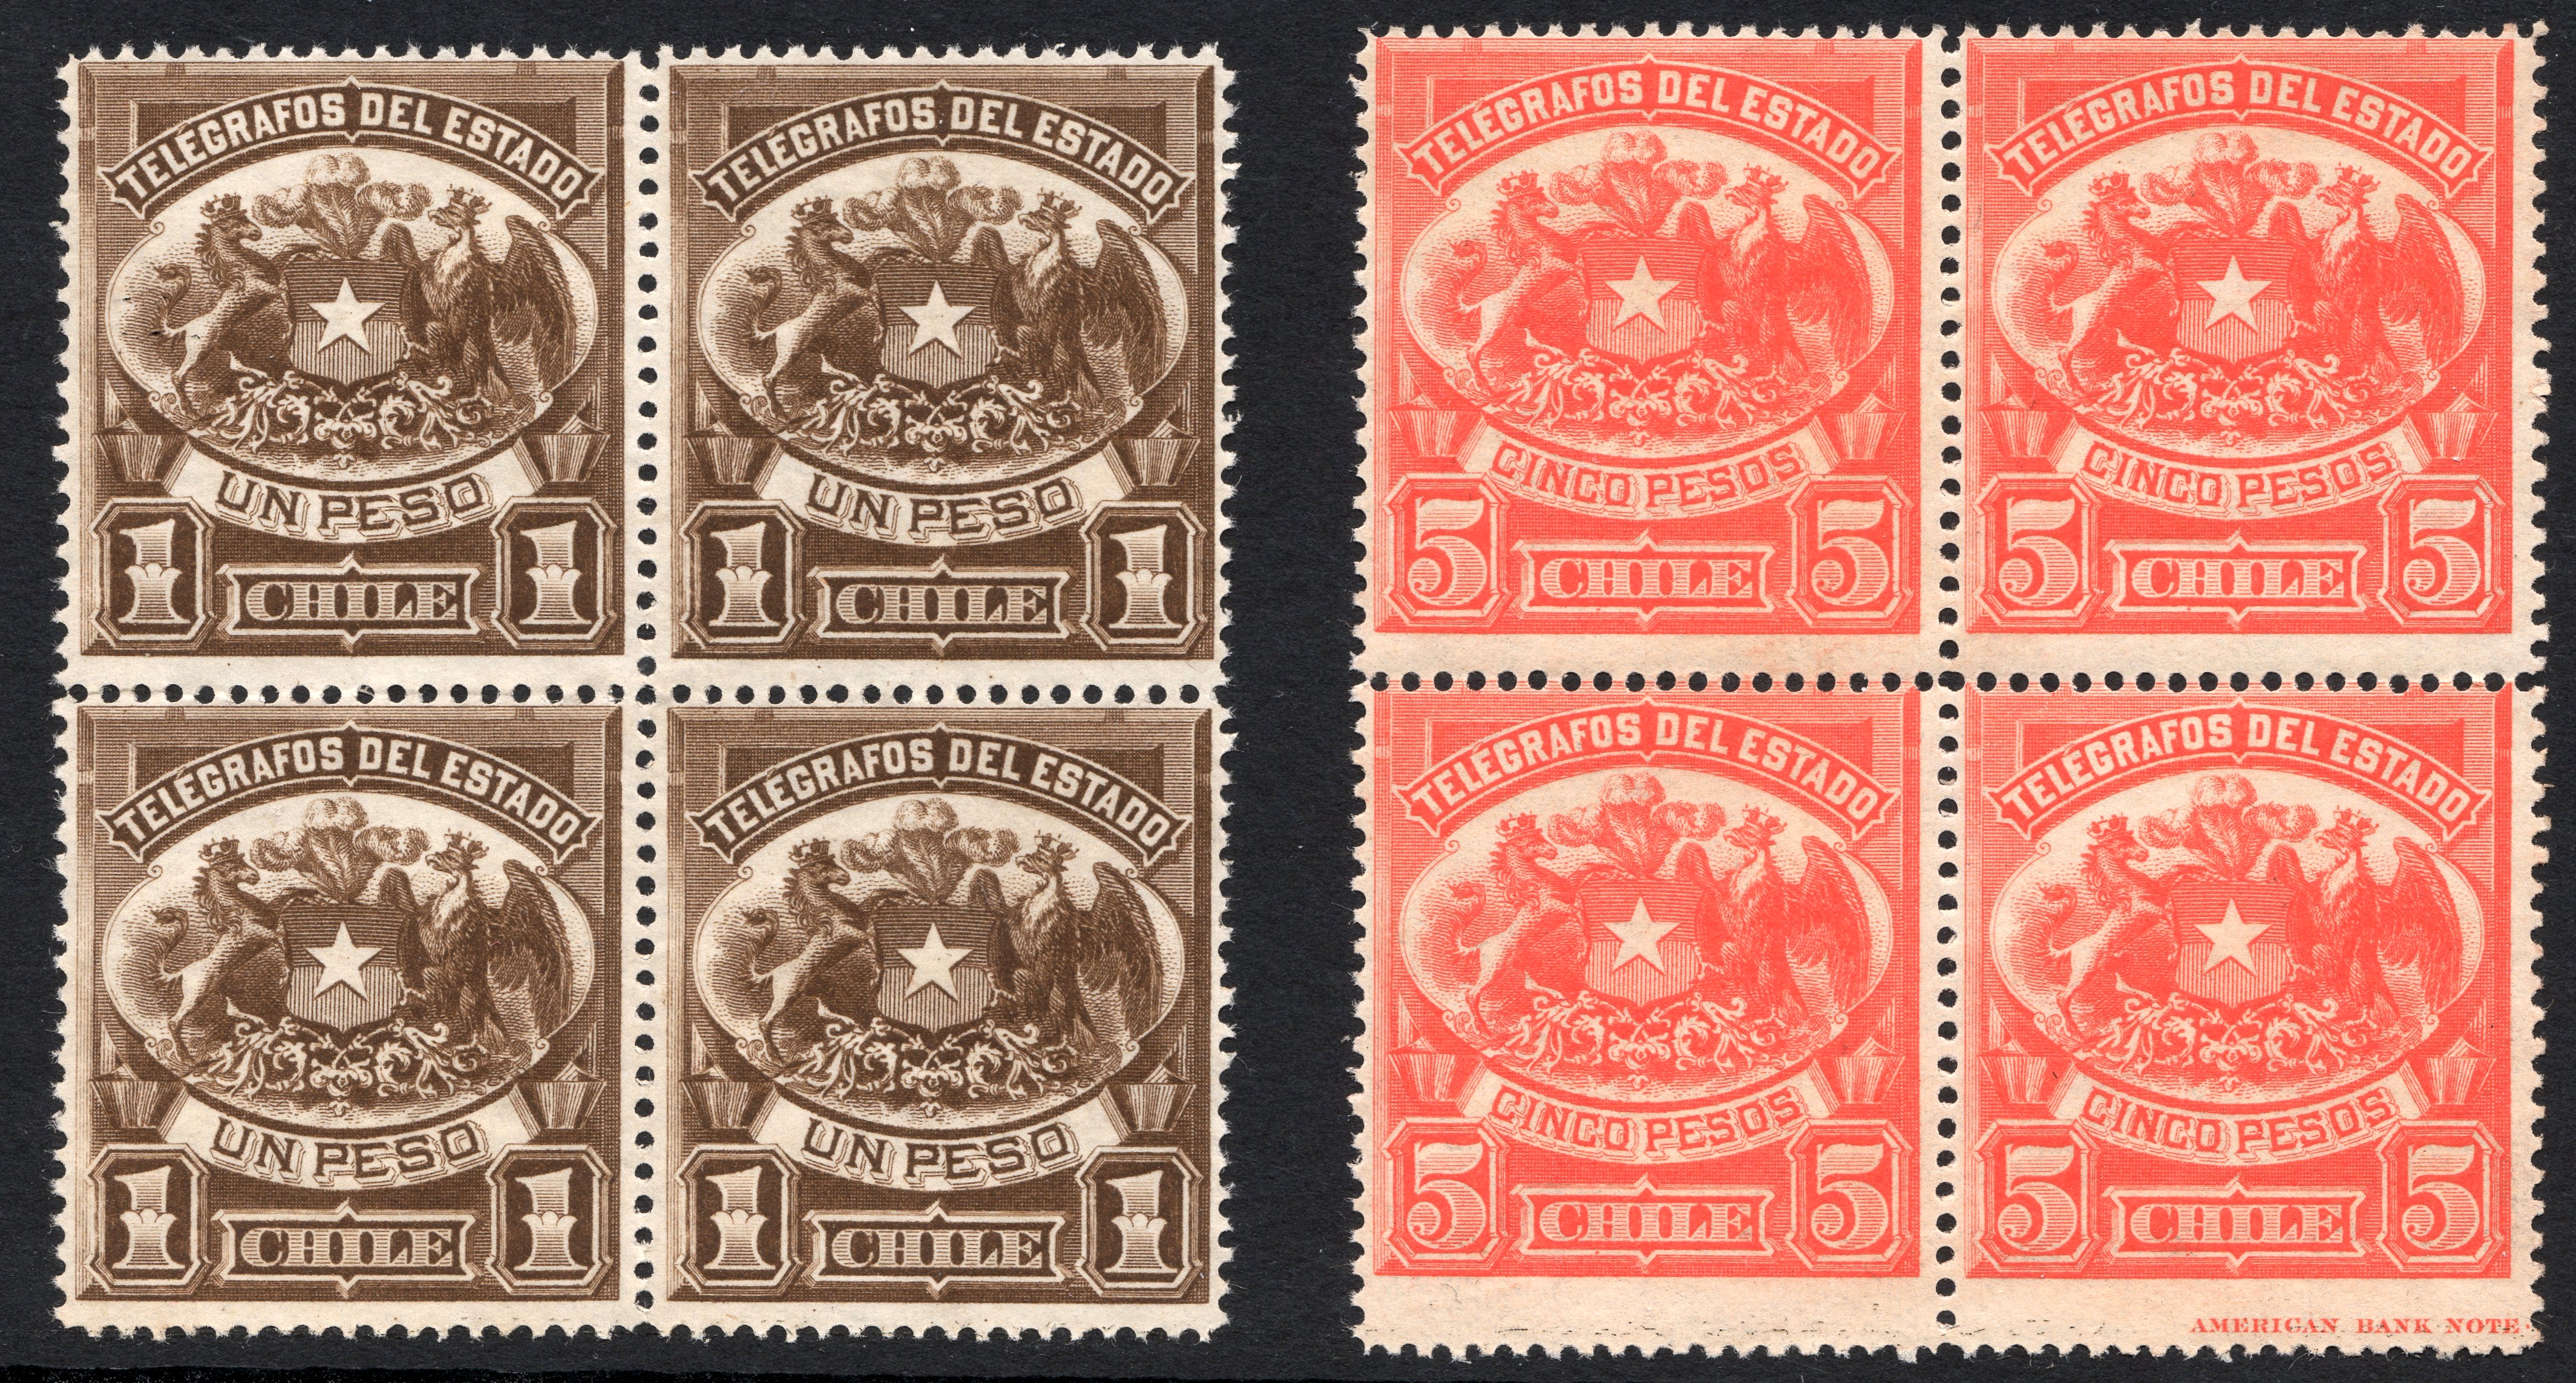 Chile 1883 telegraph stamps blocks